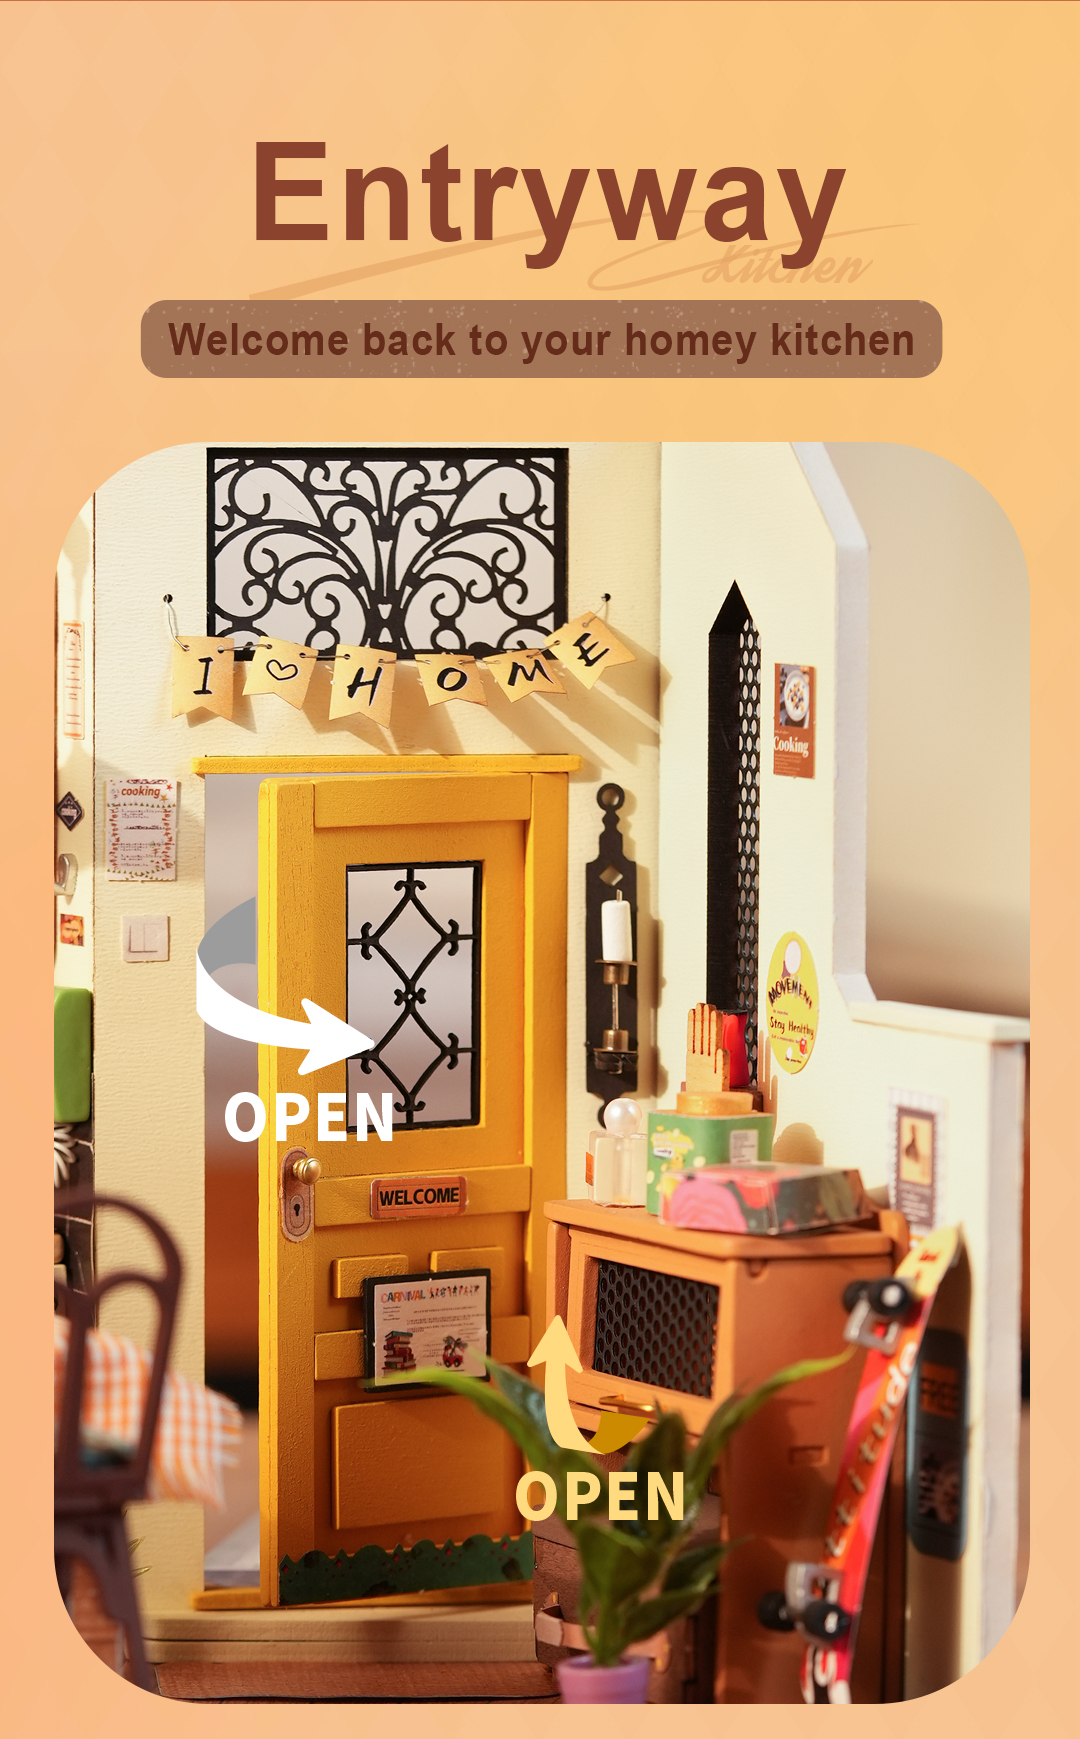 New】Rolife Happy Meals Kitchen DIY Plastic Miniature House – Kouhigh Toys